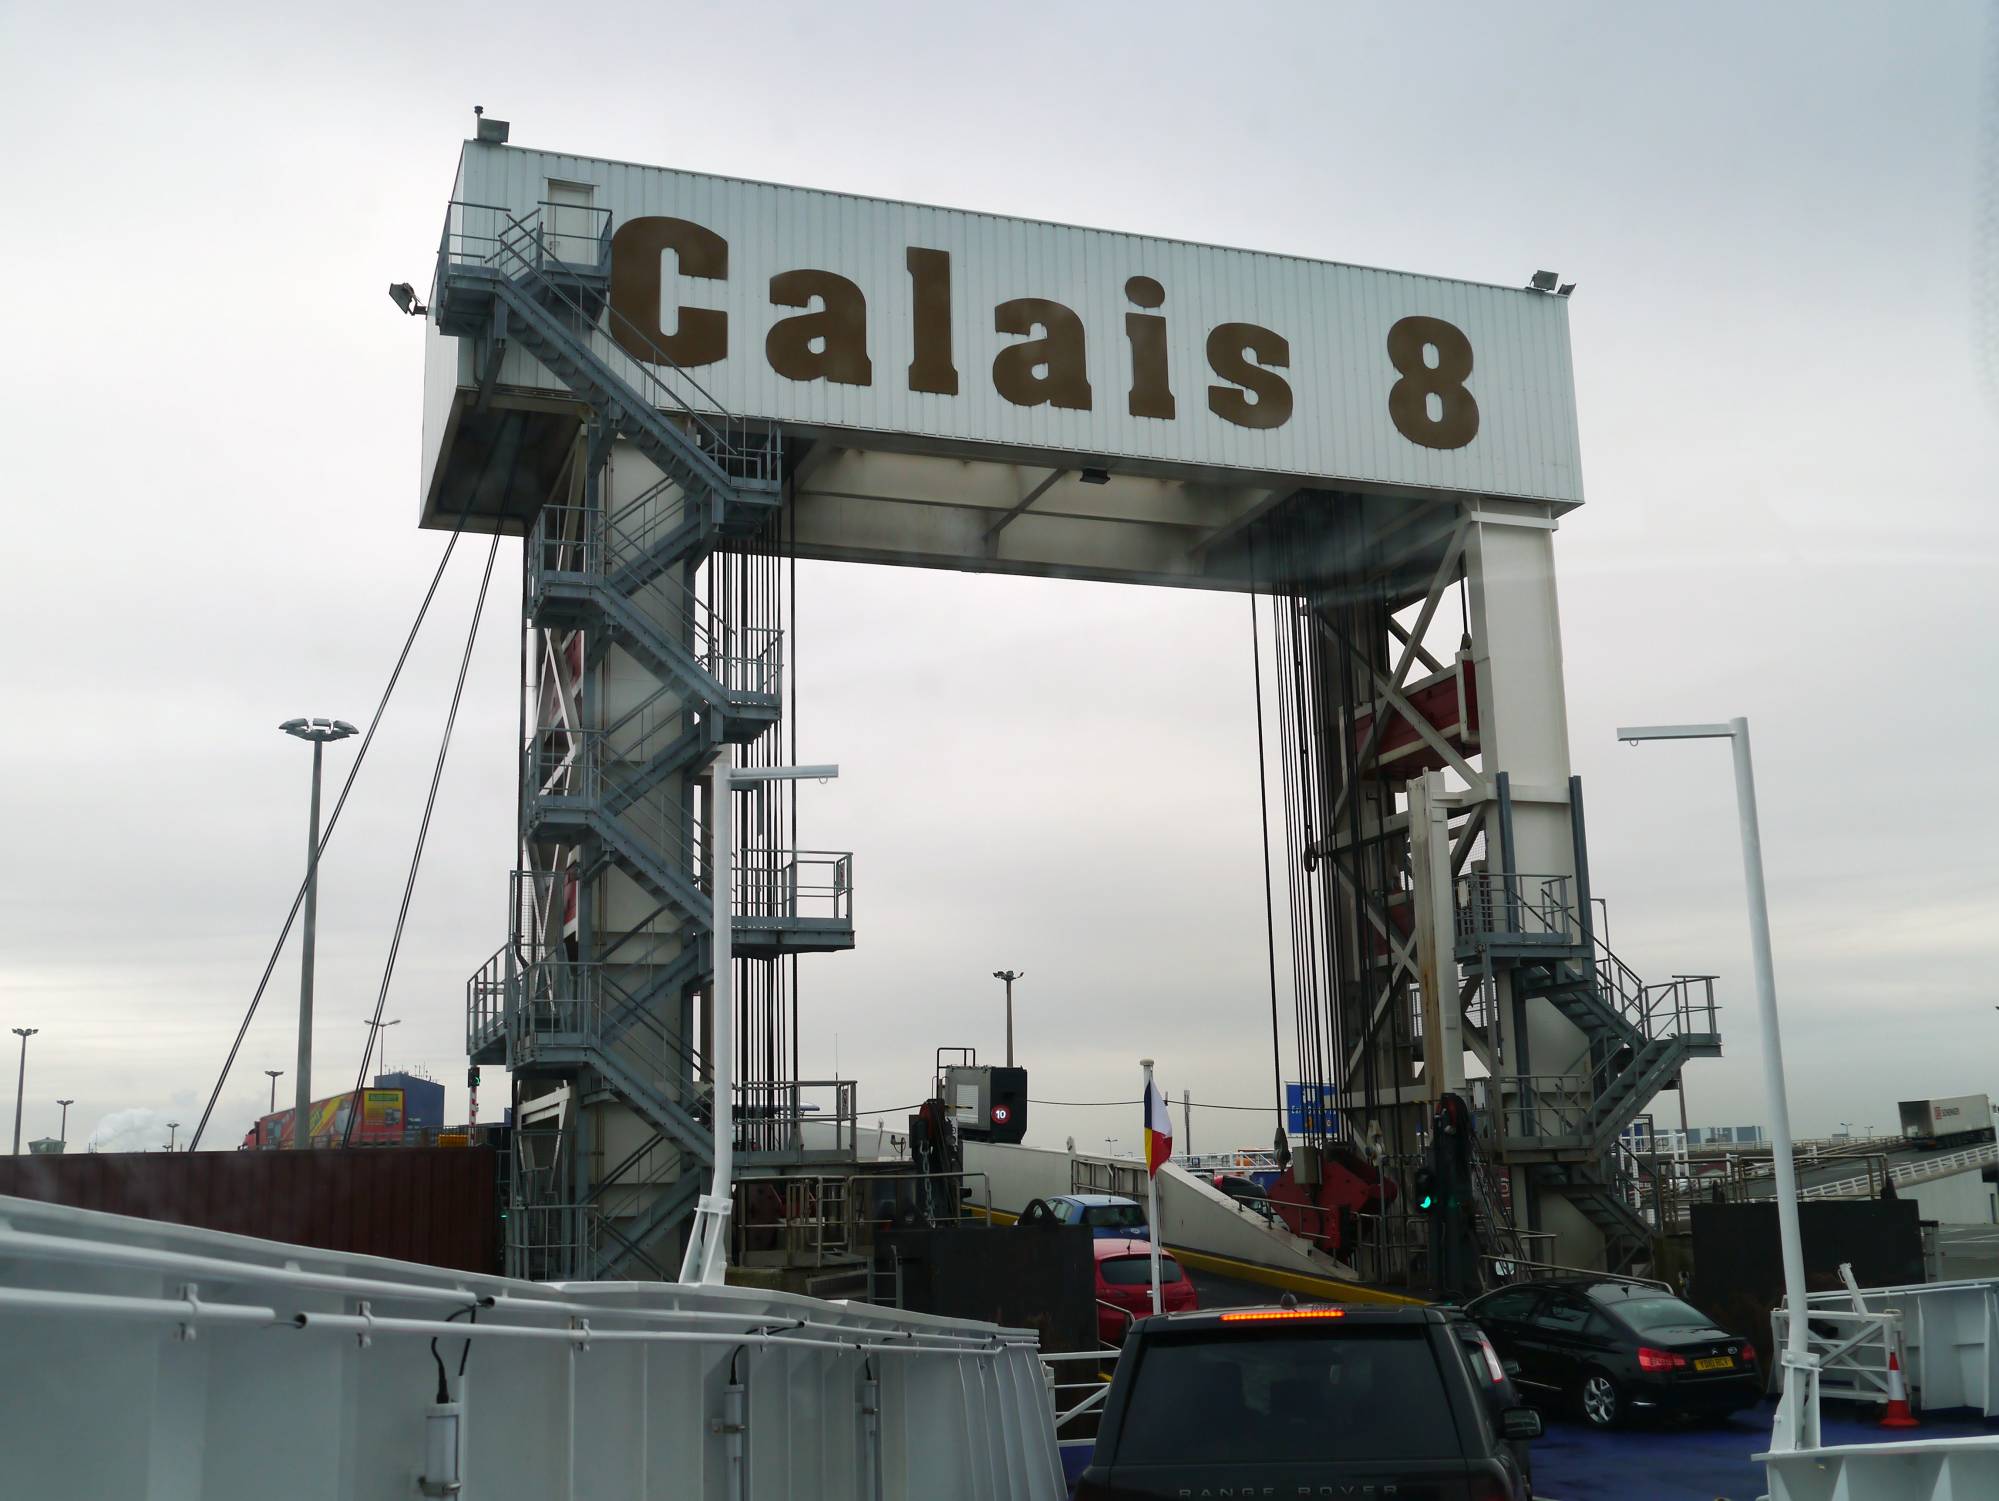 Ferry to Calais - arriving at Calais